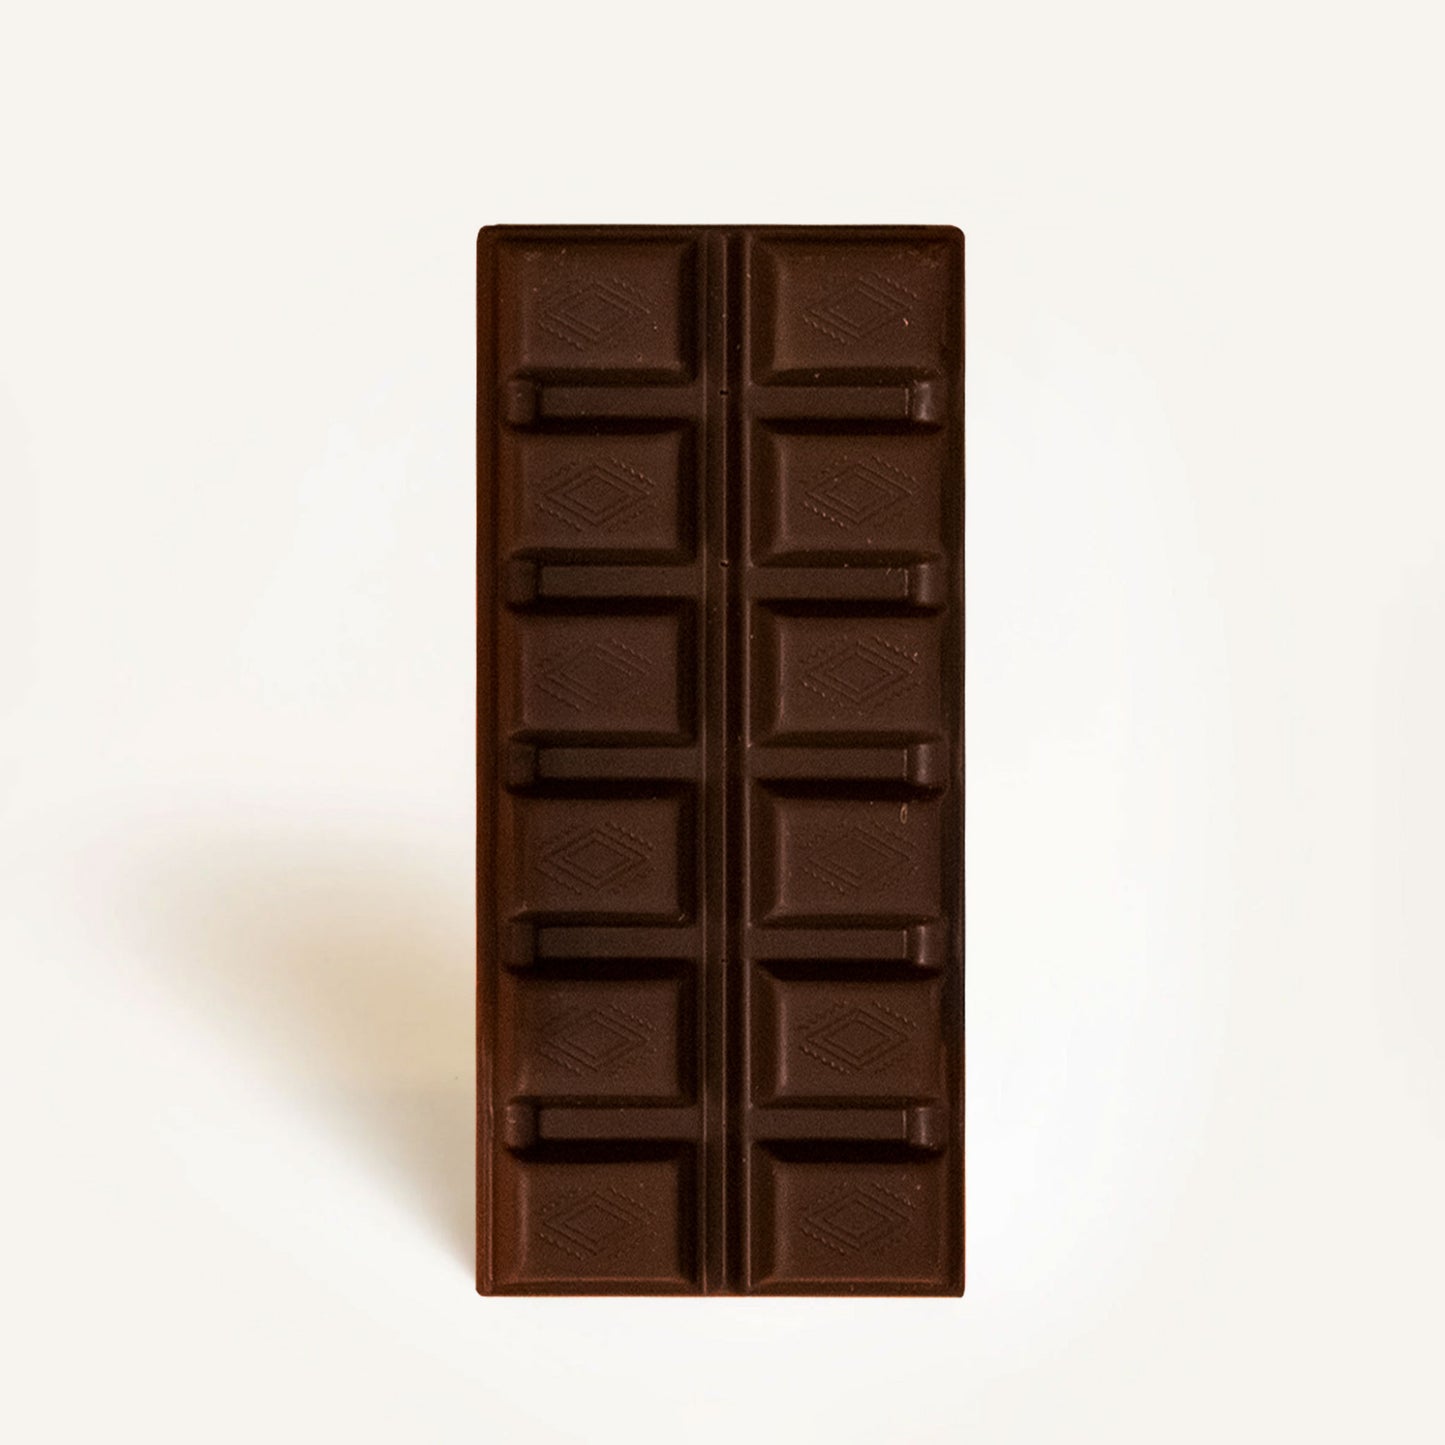 Tavoletta "Gran Cacao" 82%